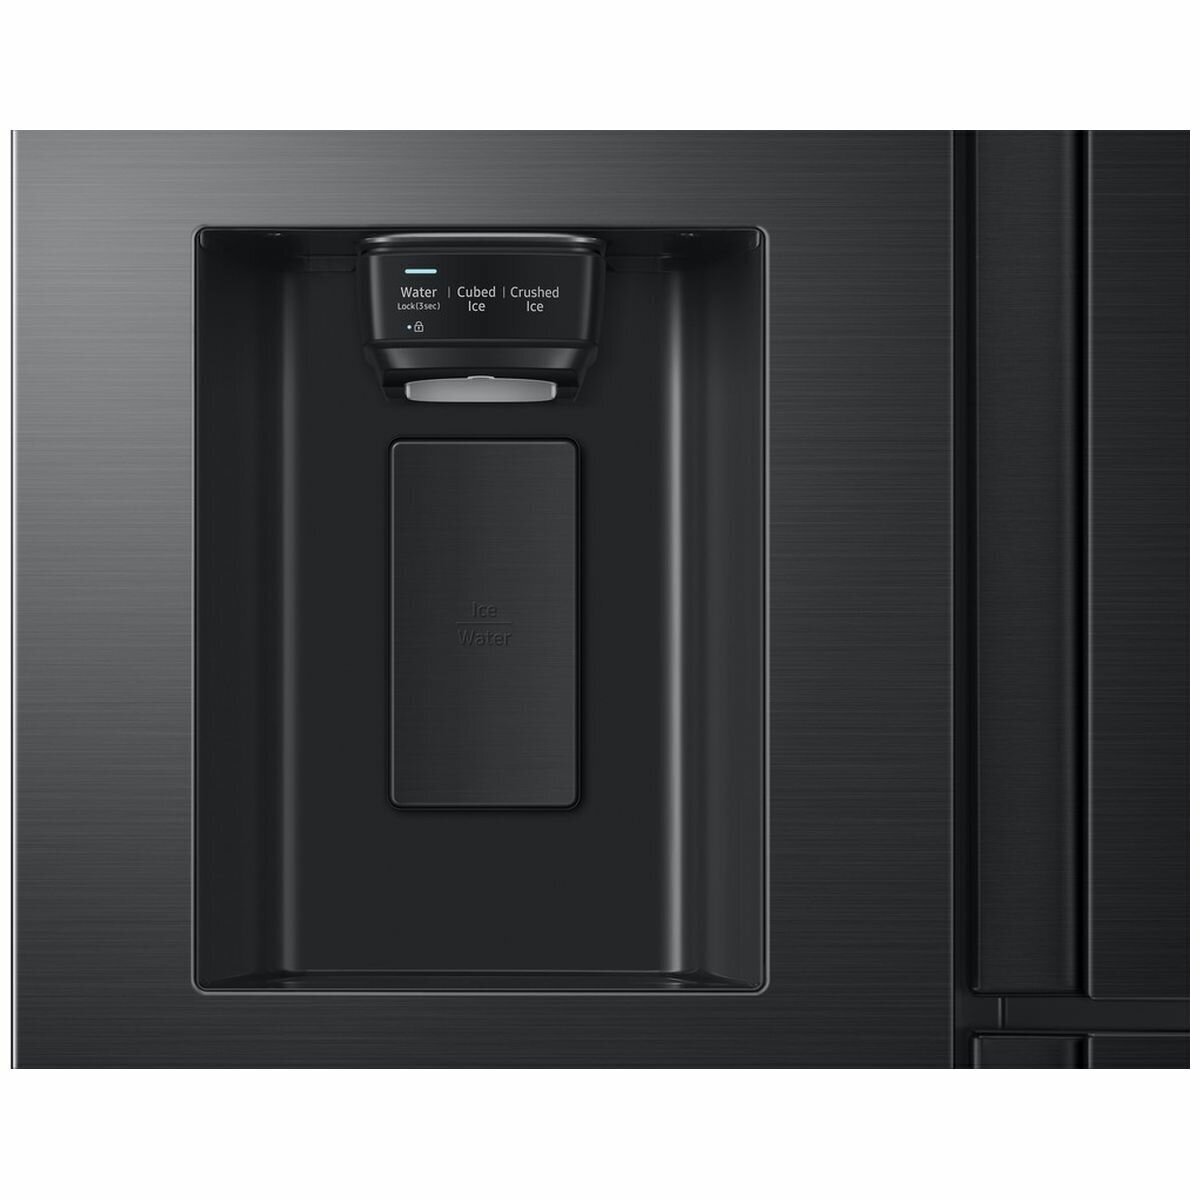 Samsung 621L Side By Side Refrigerator With 3-Door FlexZone SRS620MDMB